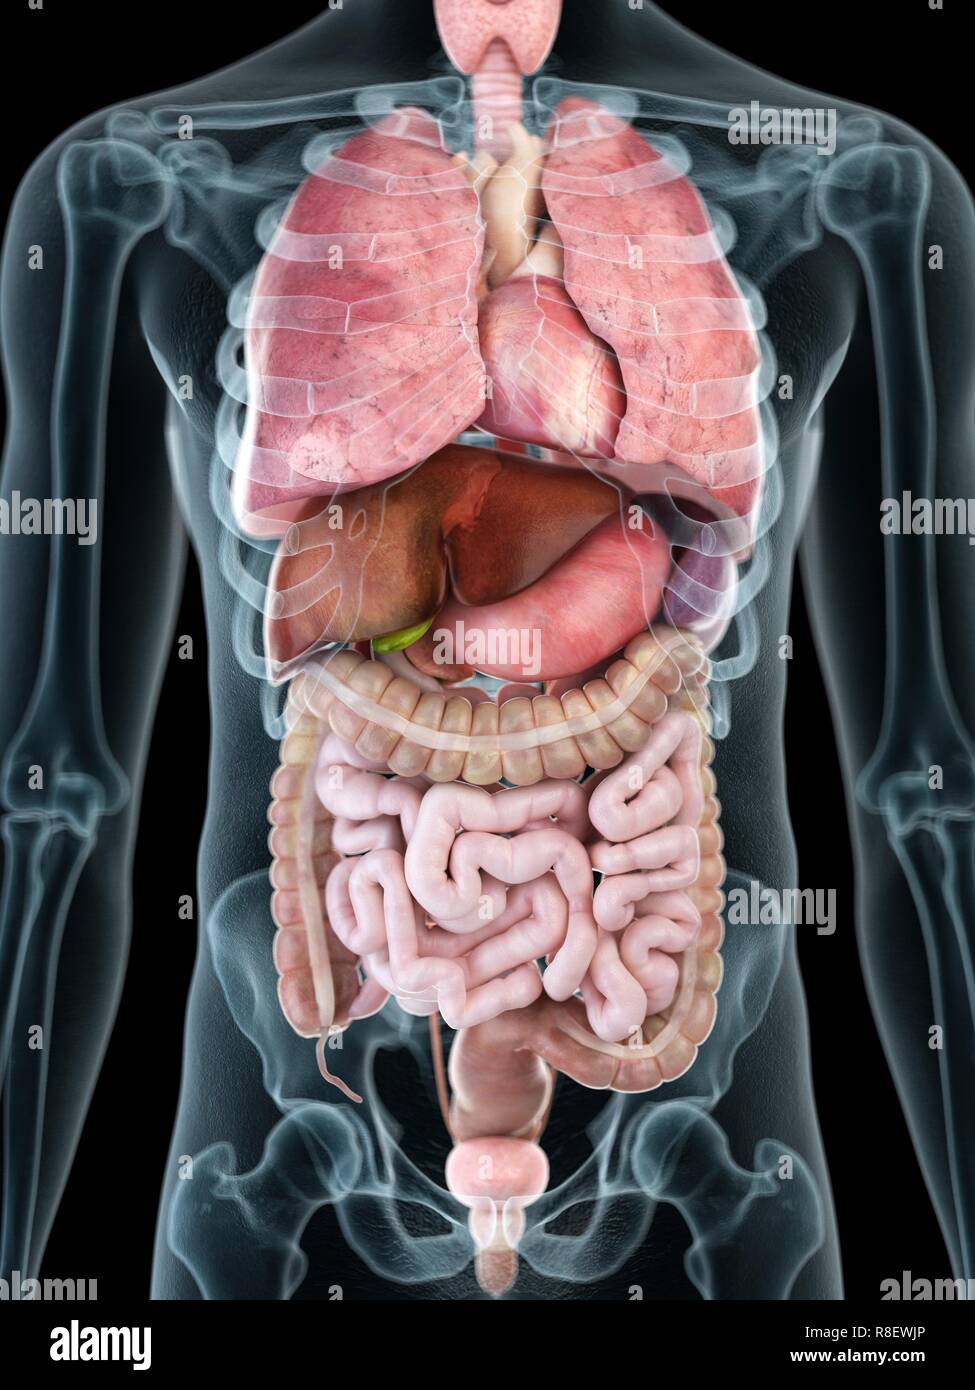 Man Anatomy Internal Organs High Resolution Stock Photography and